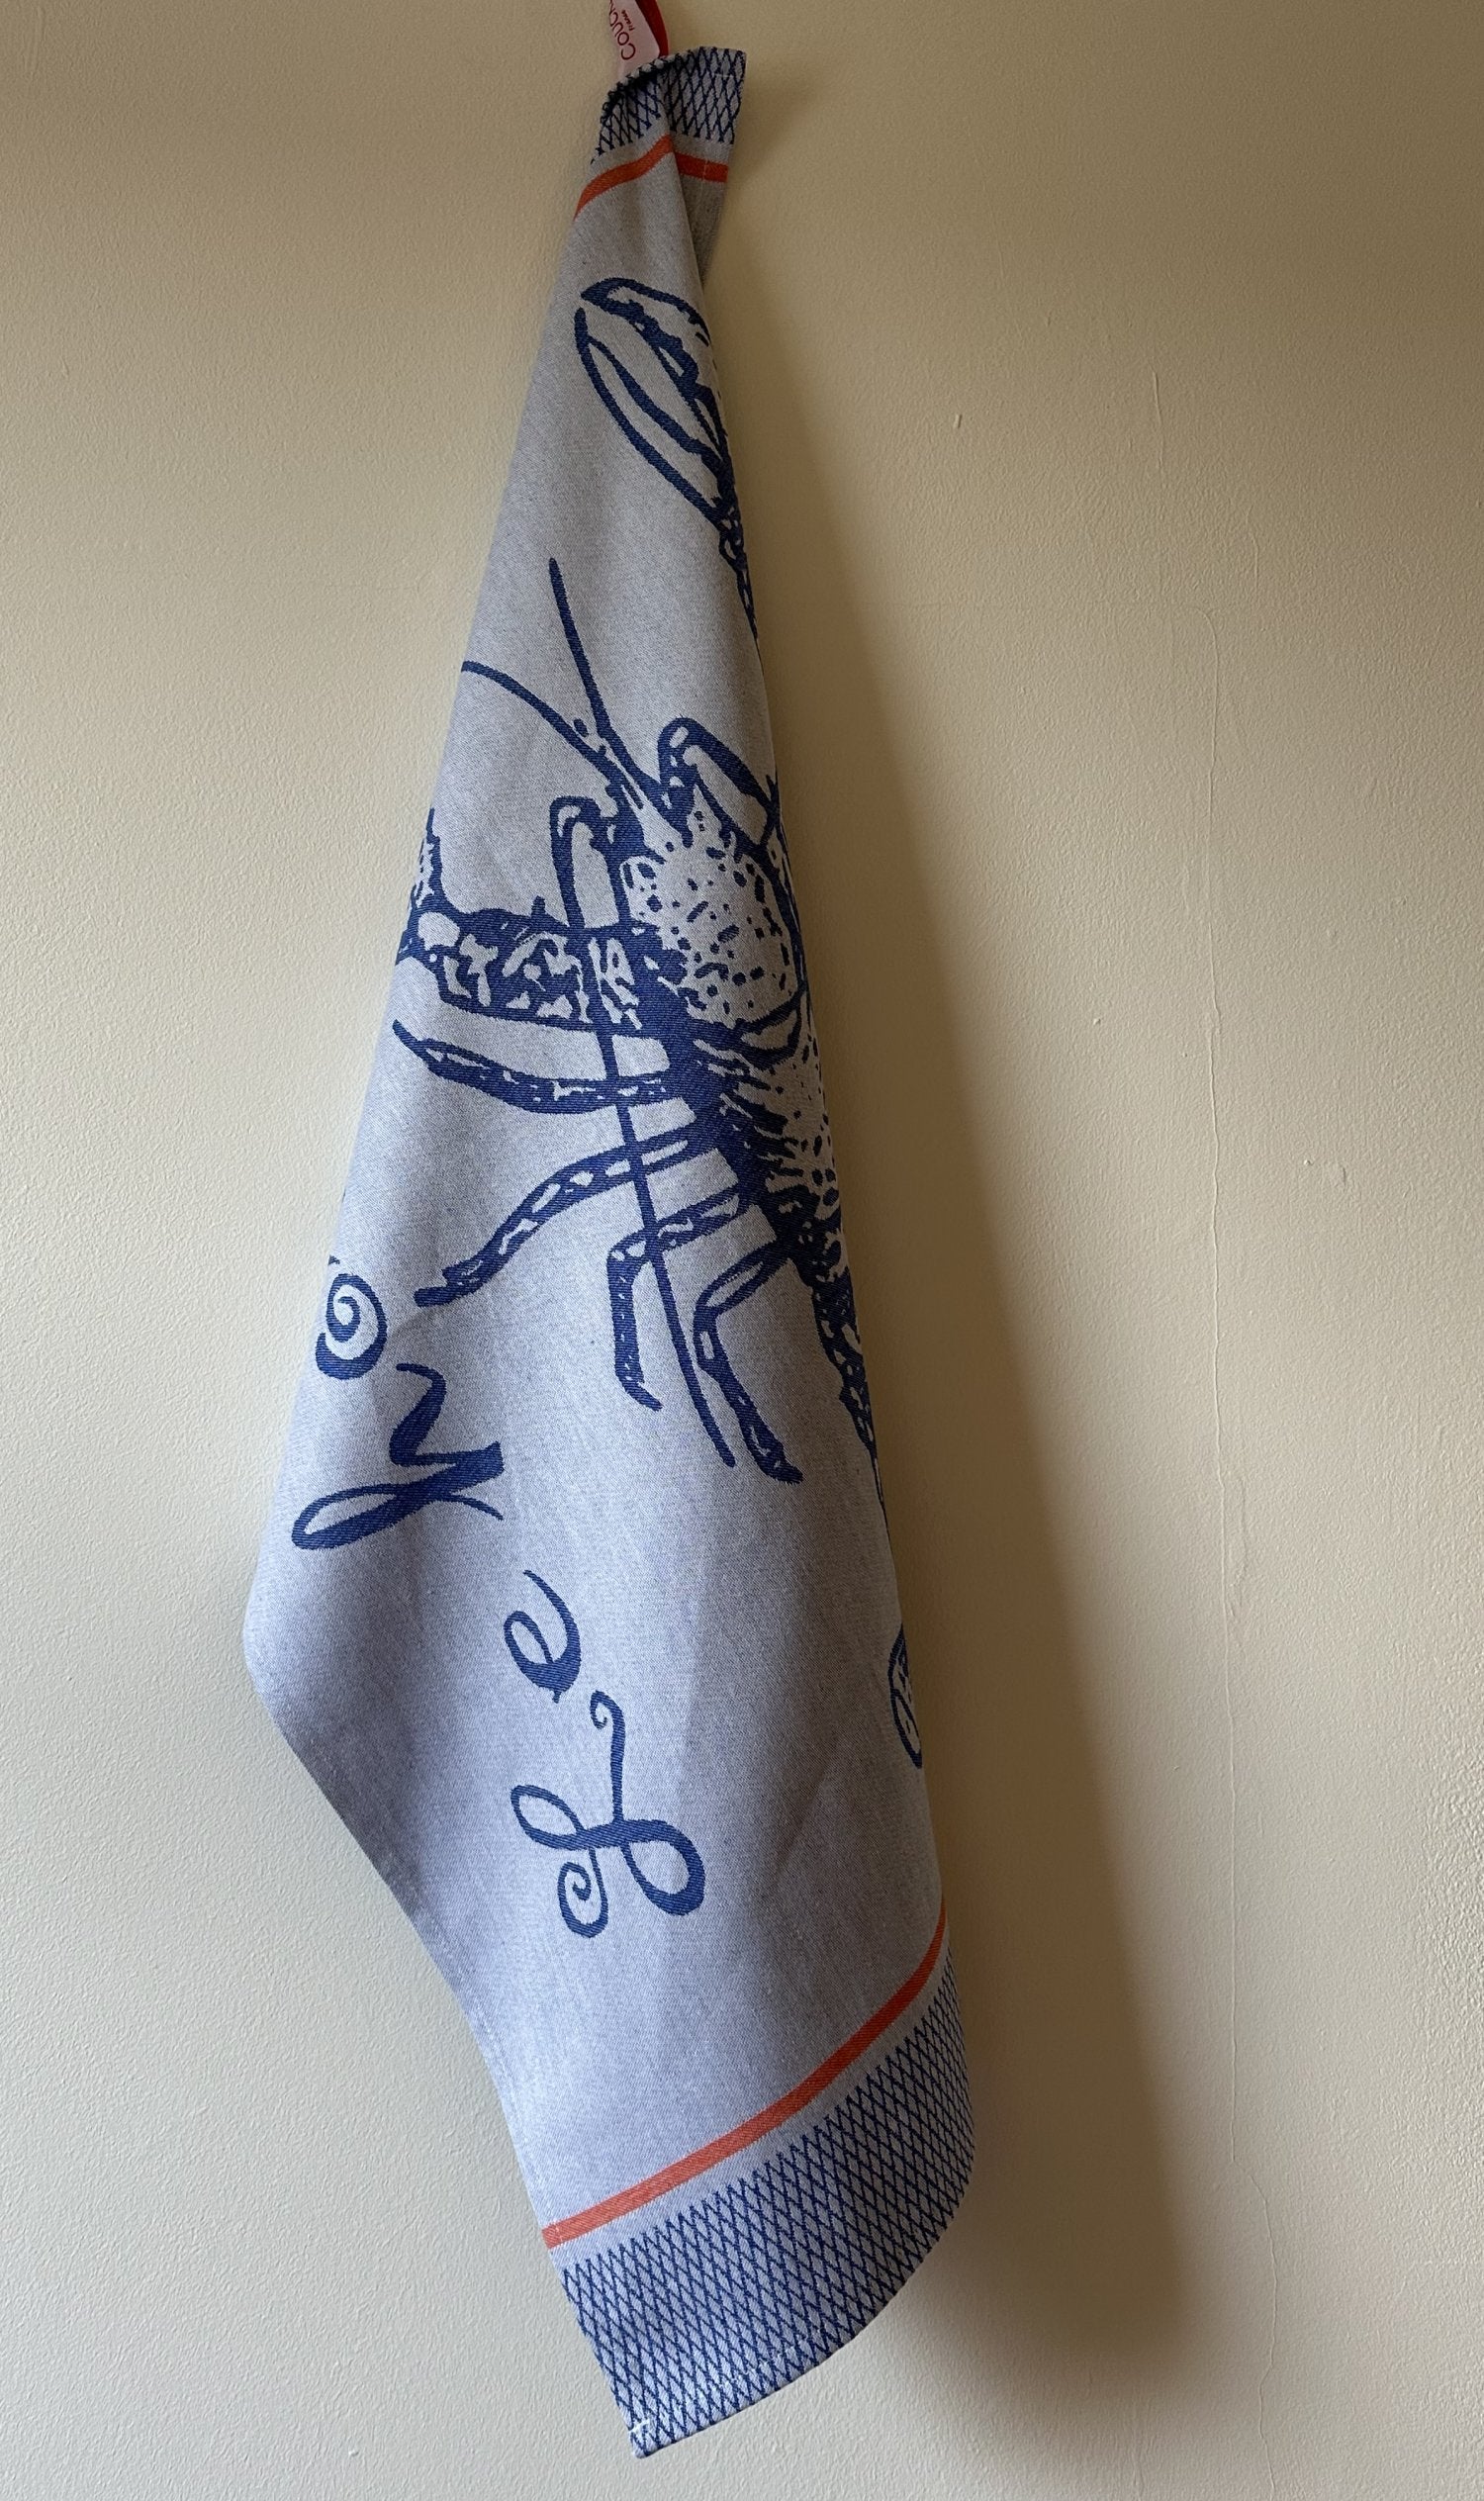 Coucke "A la Peche Bleu", Woven cotton tea towel. Designed in France.